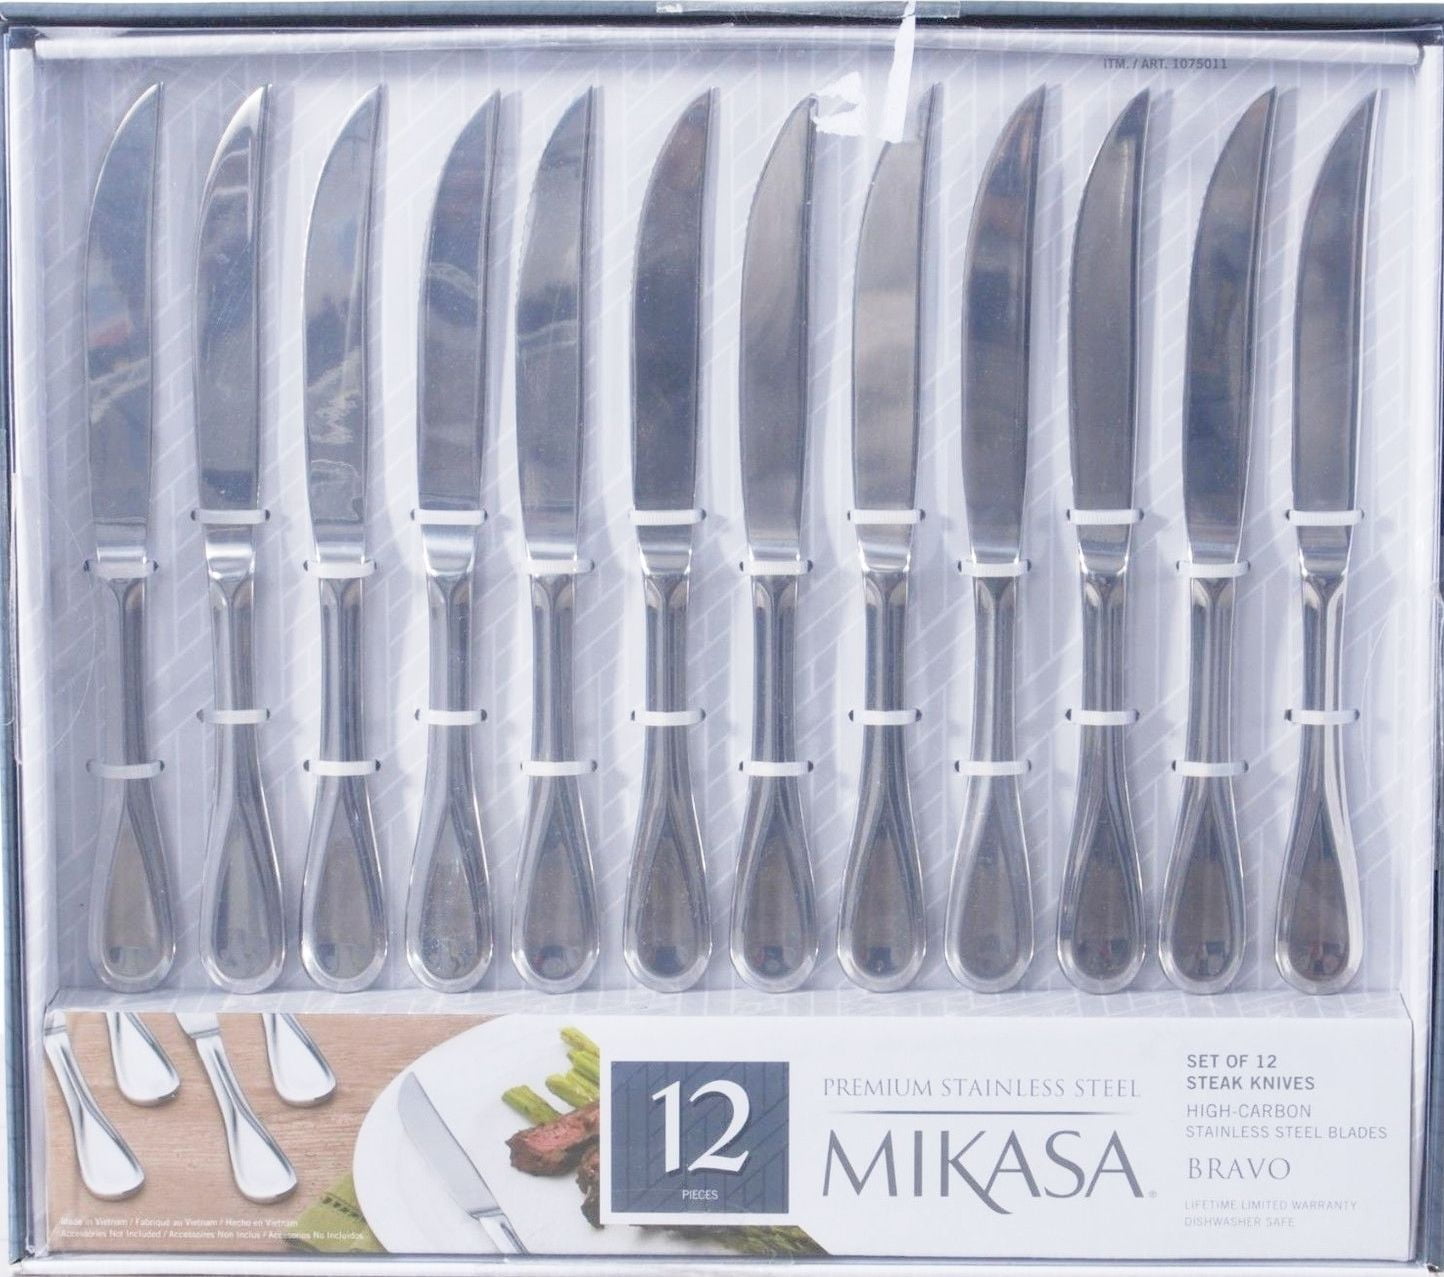 Mikasa Bravo Premium Stainless Steel Steak Knife - Set of 12